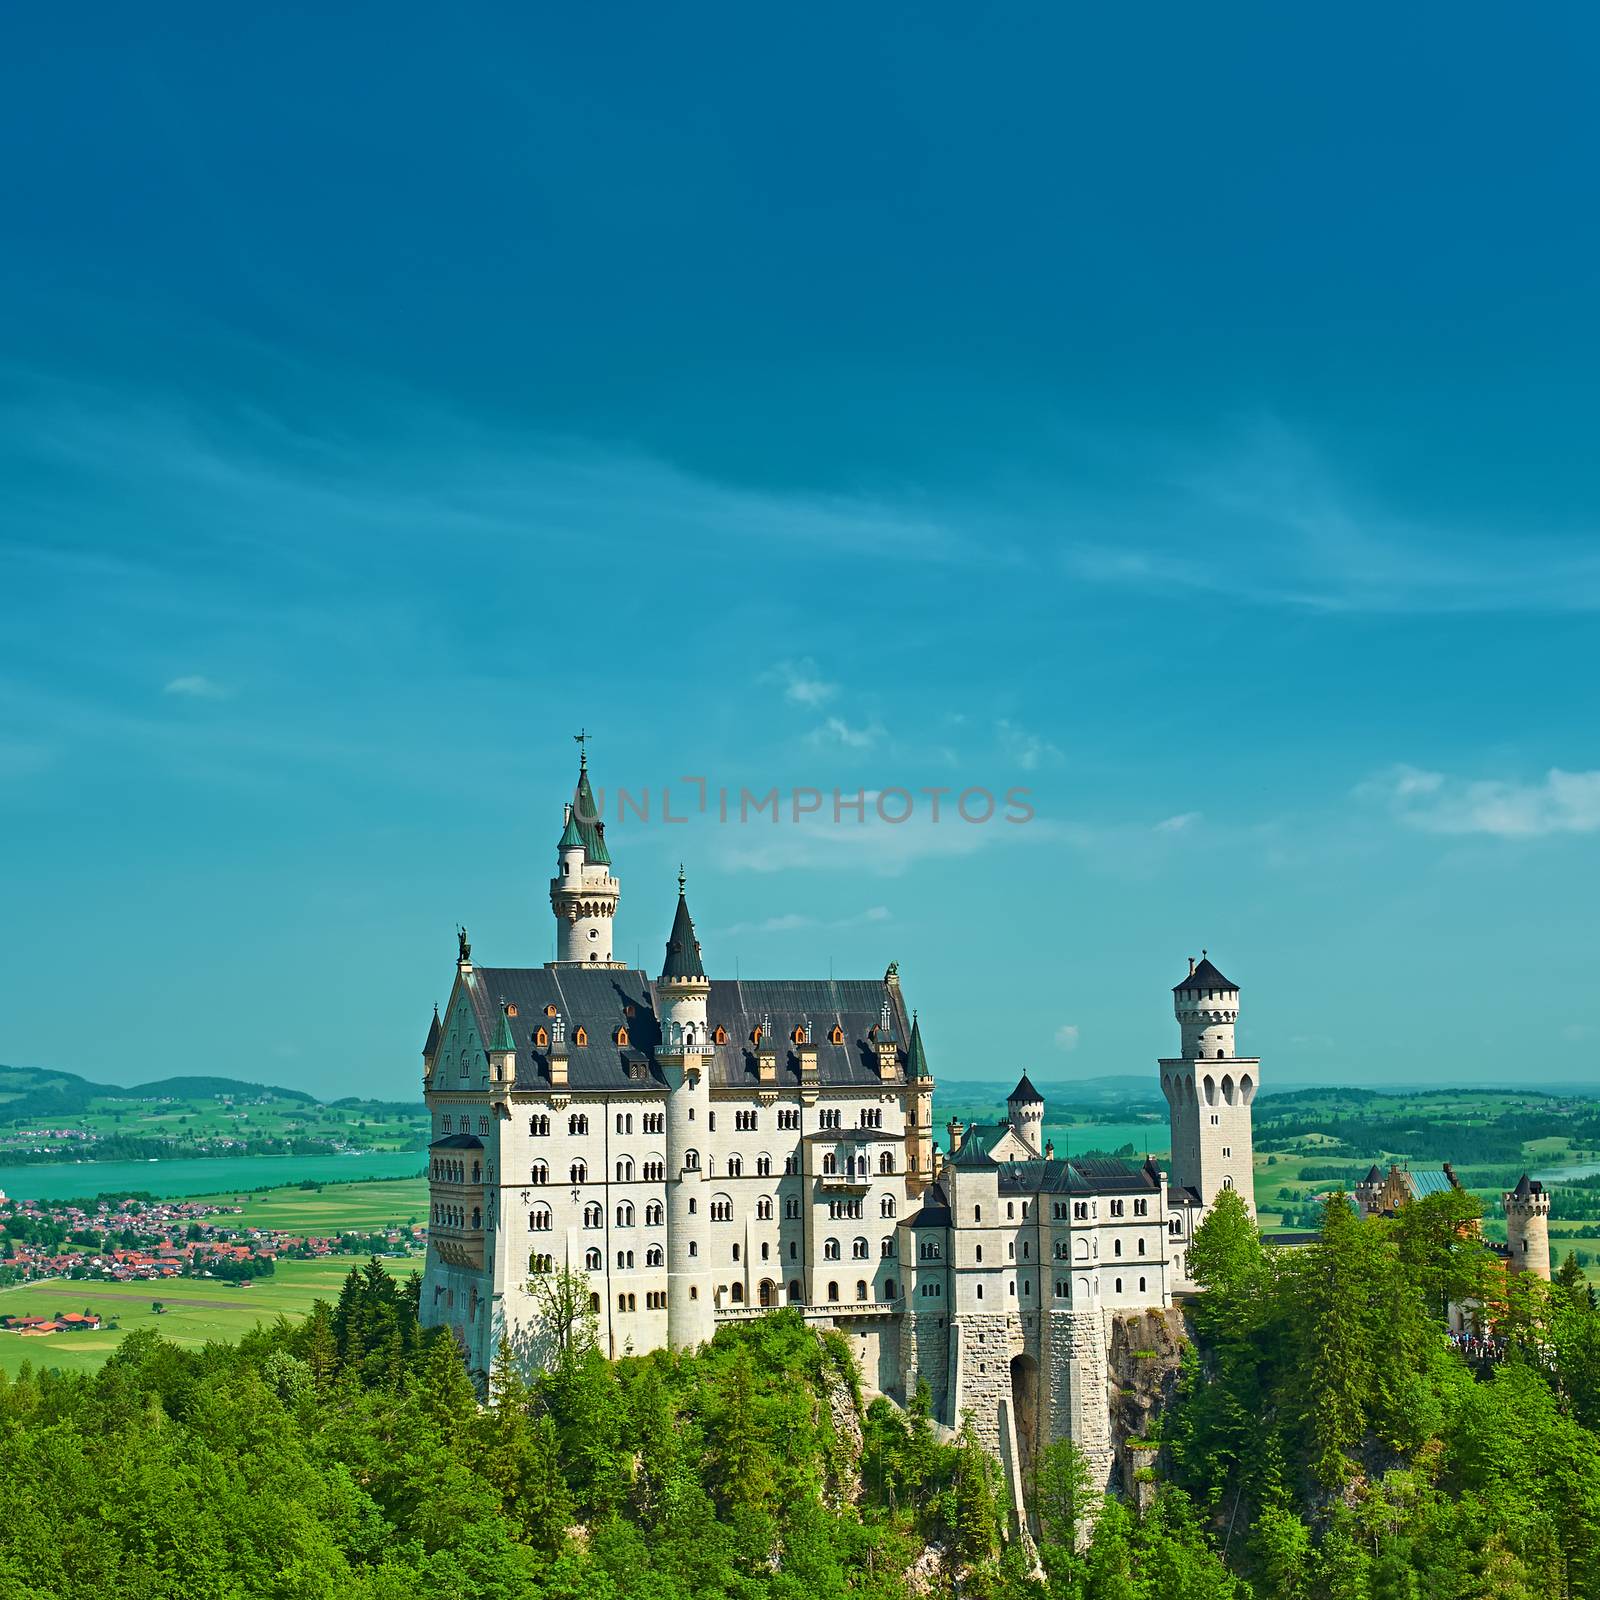 The castle of Neuschwanstein in Germany by haveseen